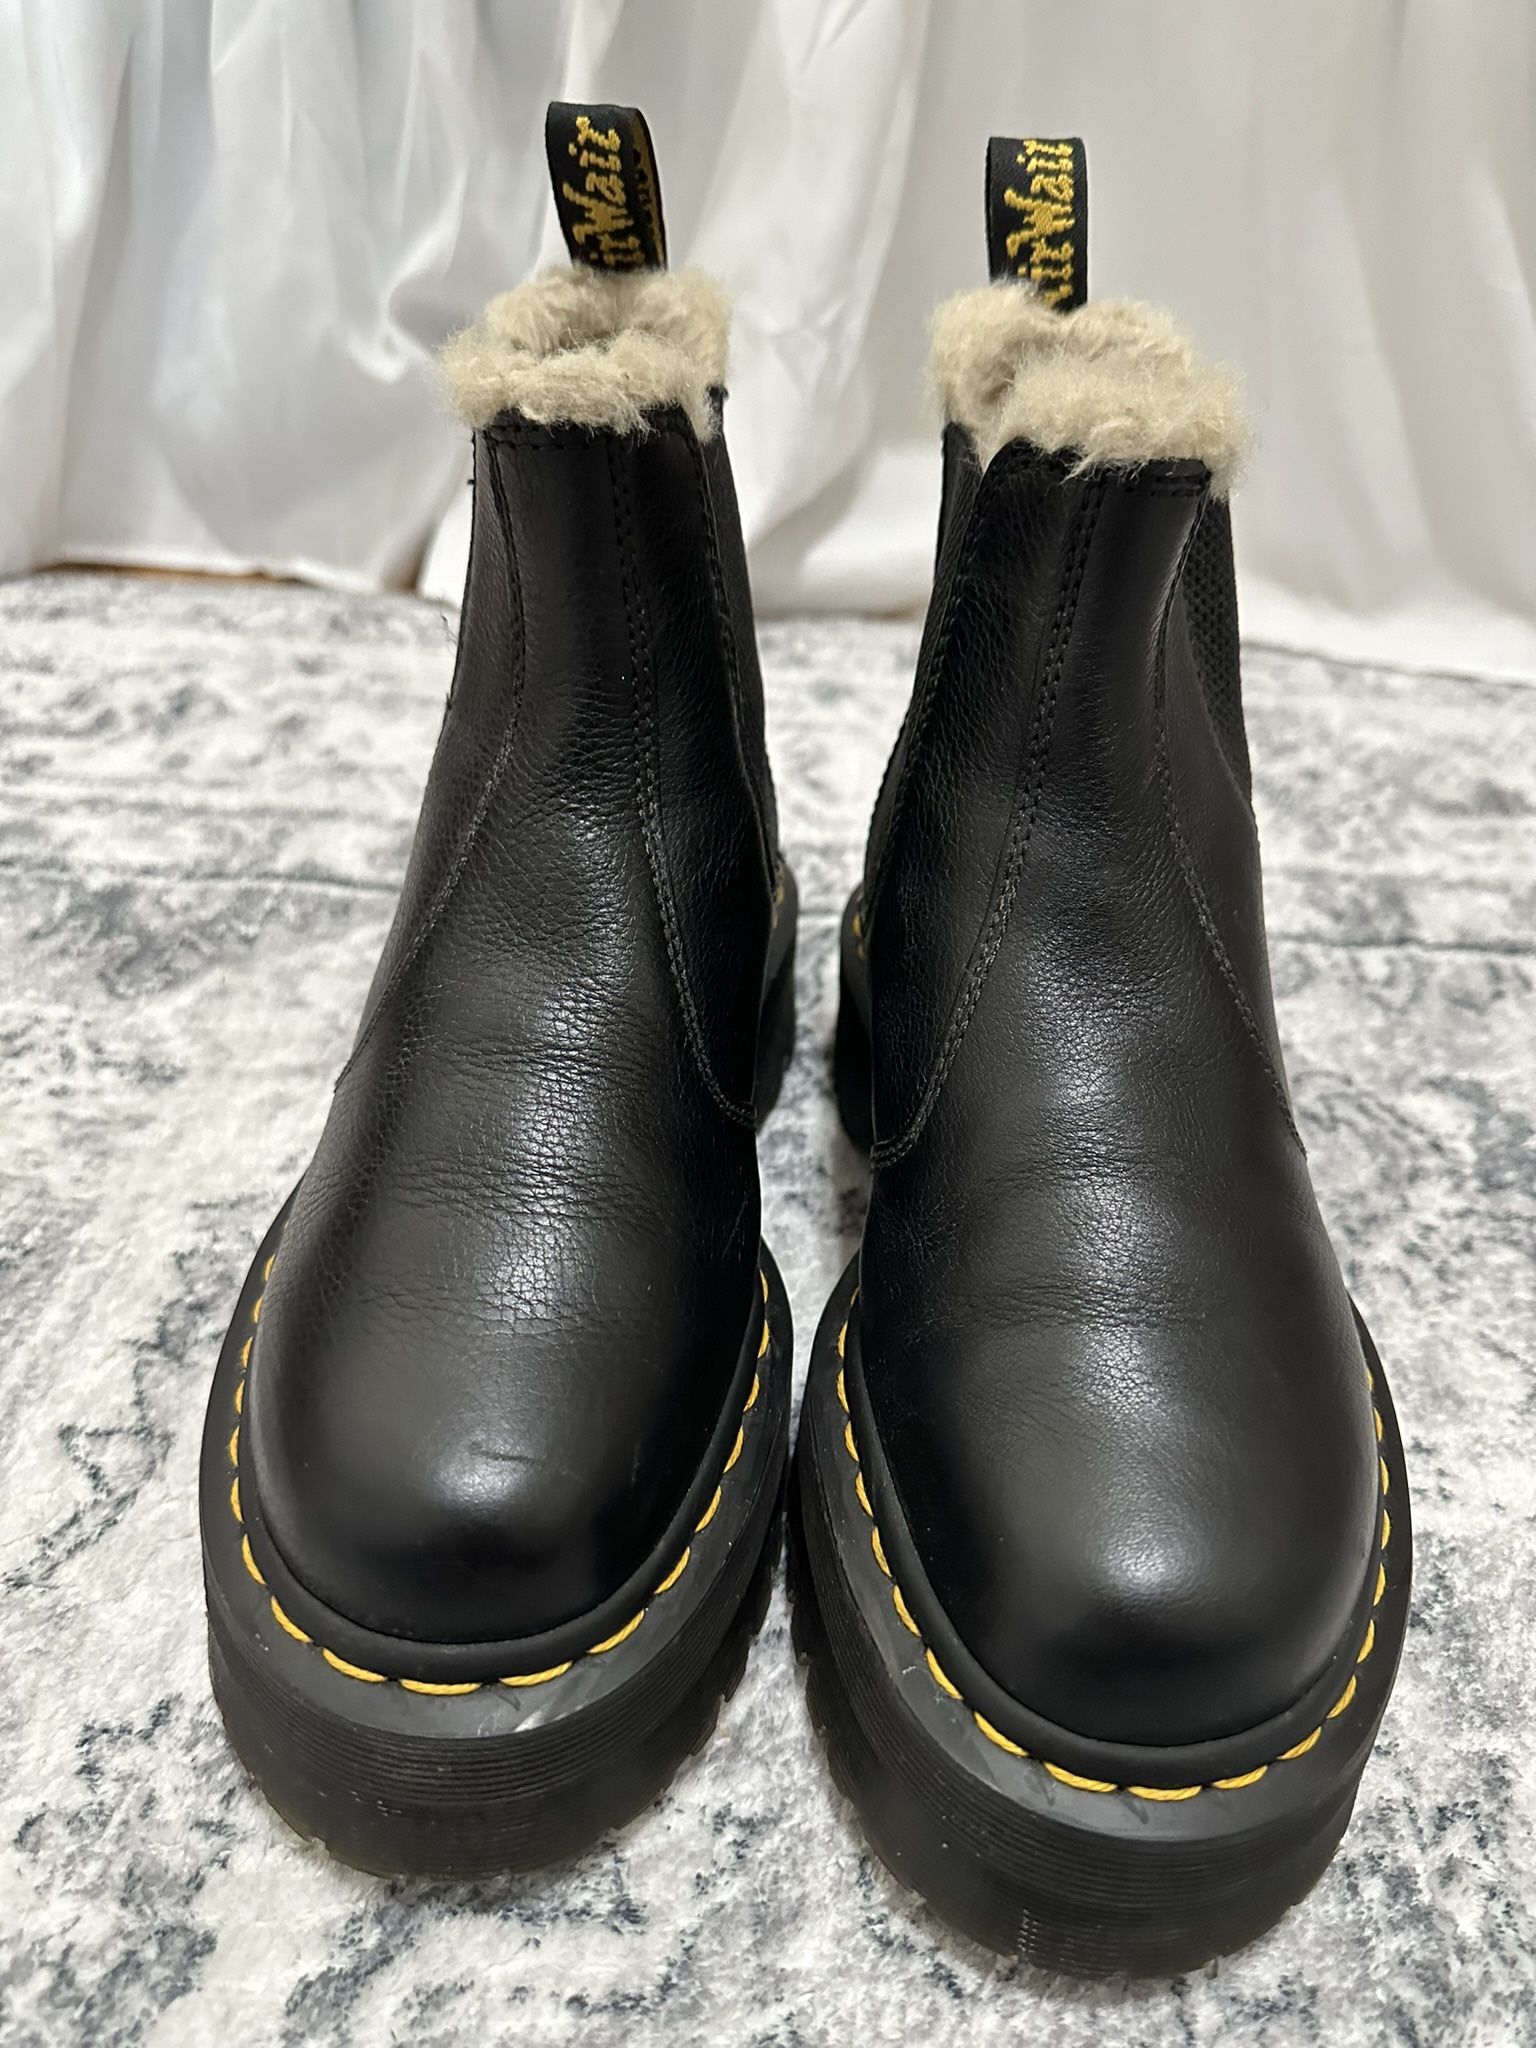 New DR MARTENS platform Chelsea boots with fur 